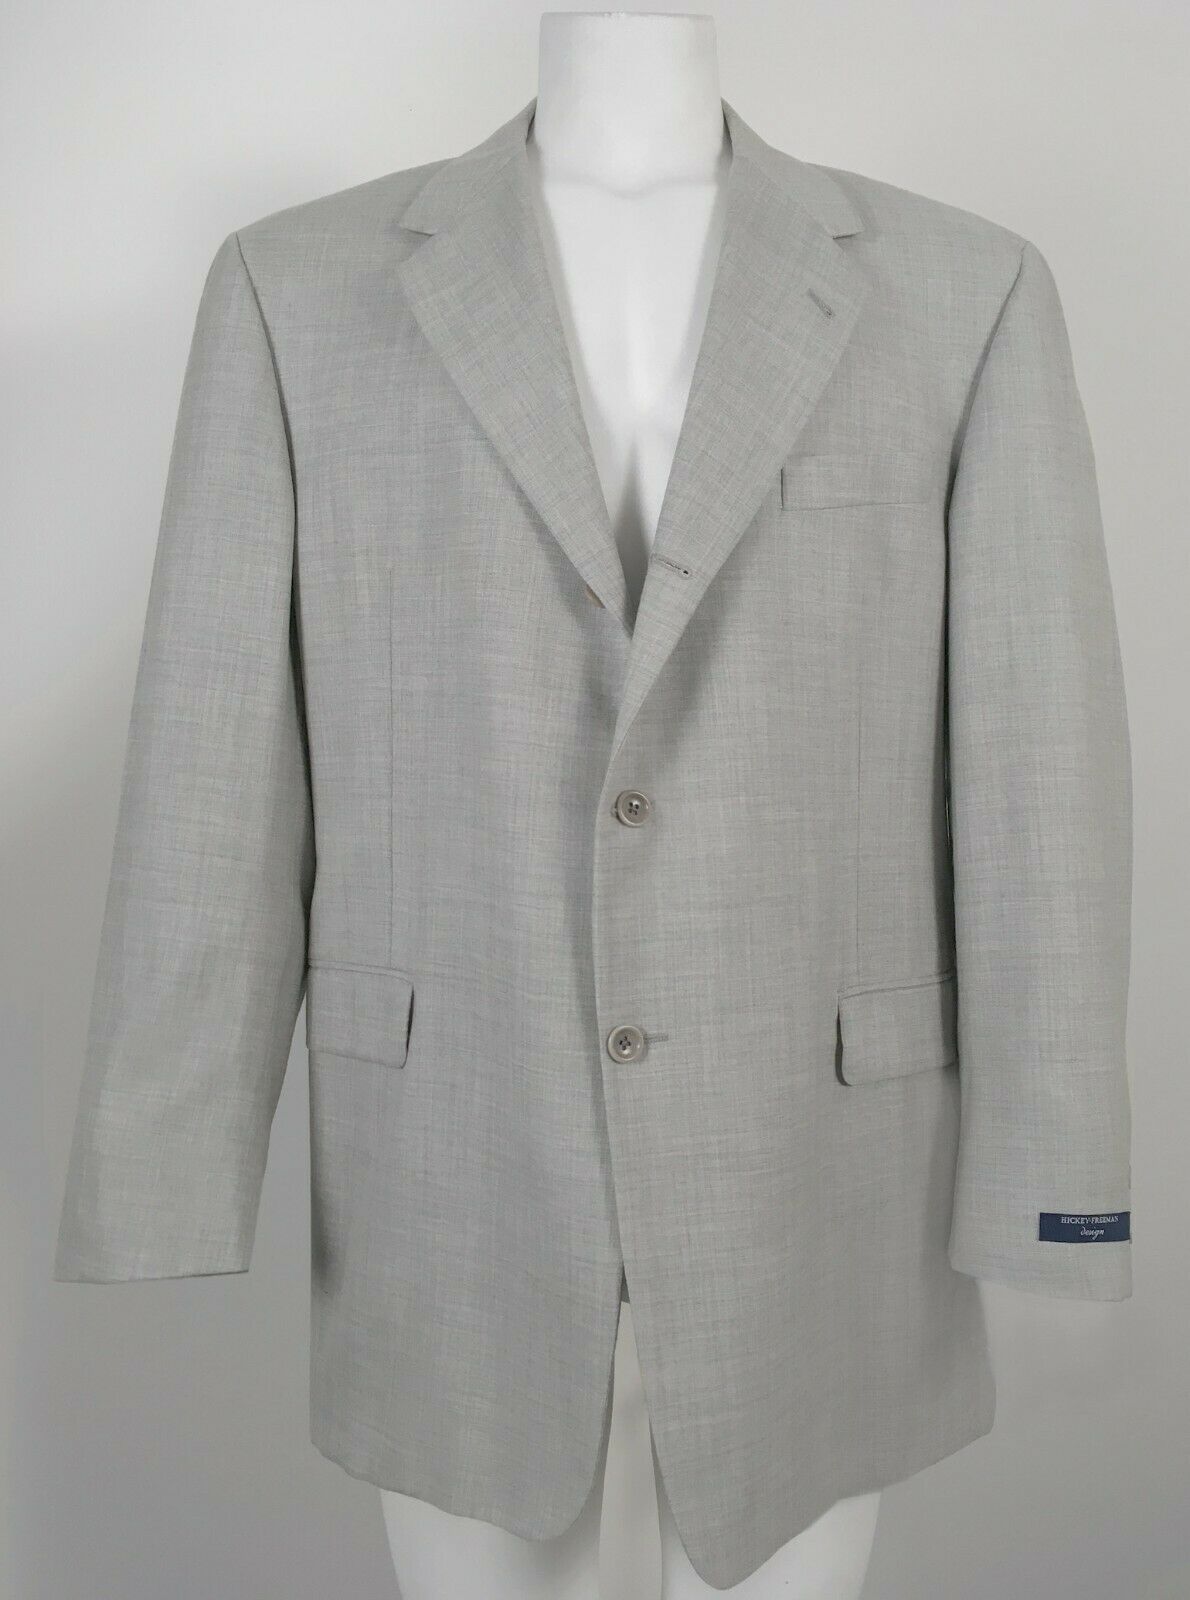 Primary image for NEW $1650 Hickey Freeman Cashmere Sportcoat (Blazer)! 46 Reg Light Gray USA Made